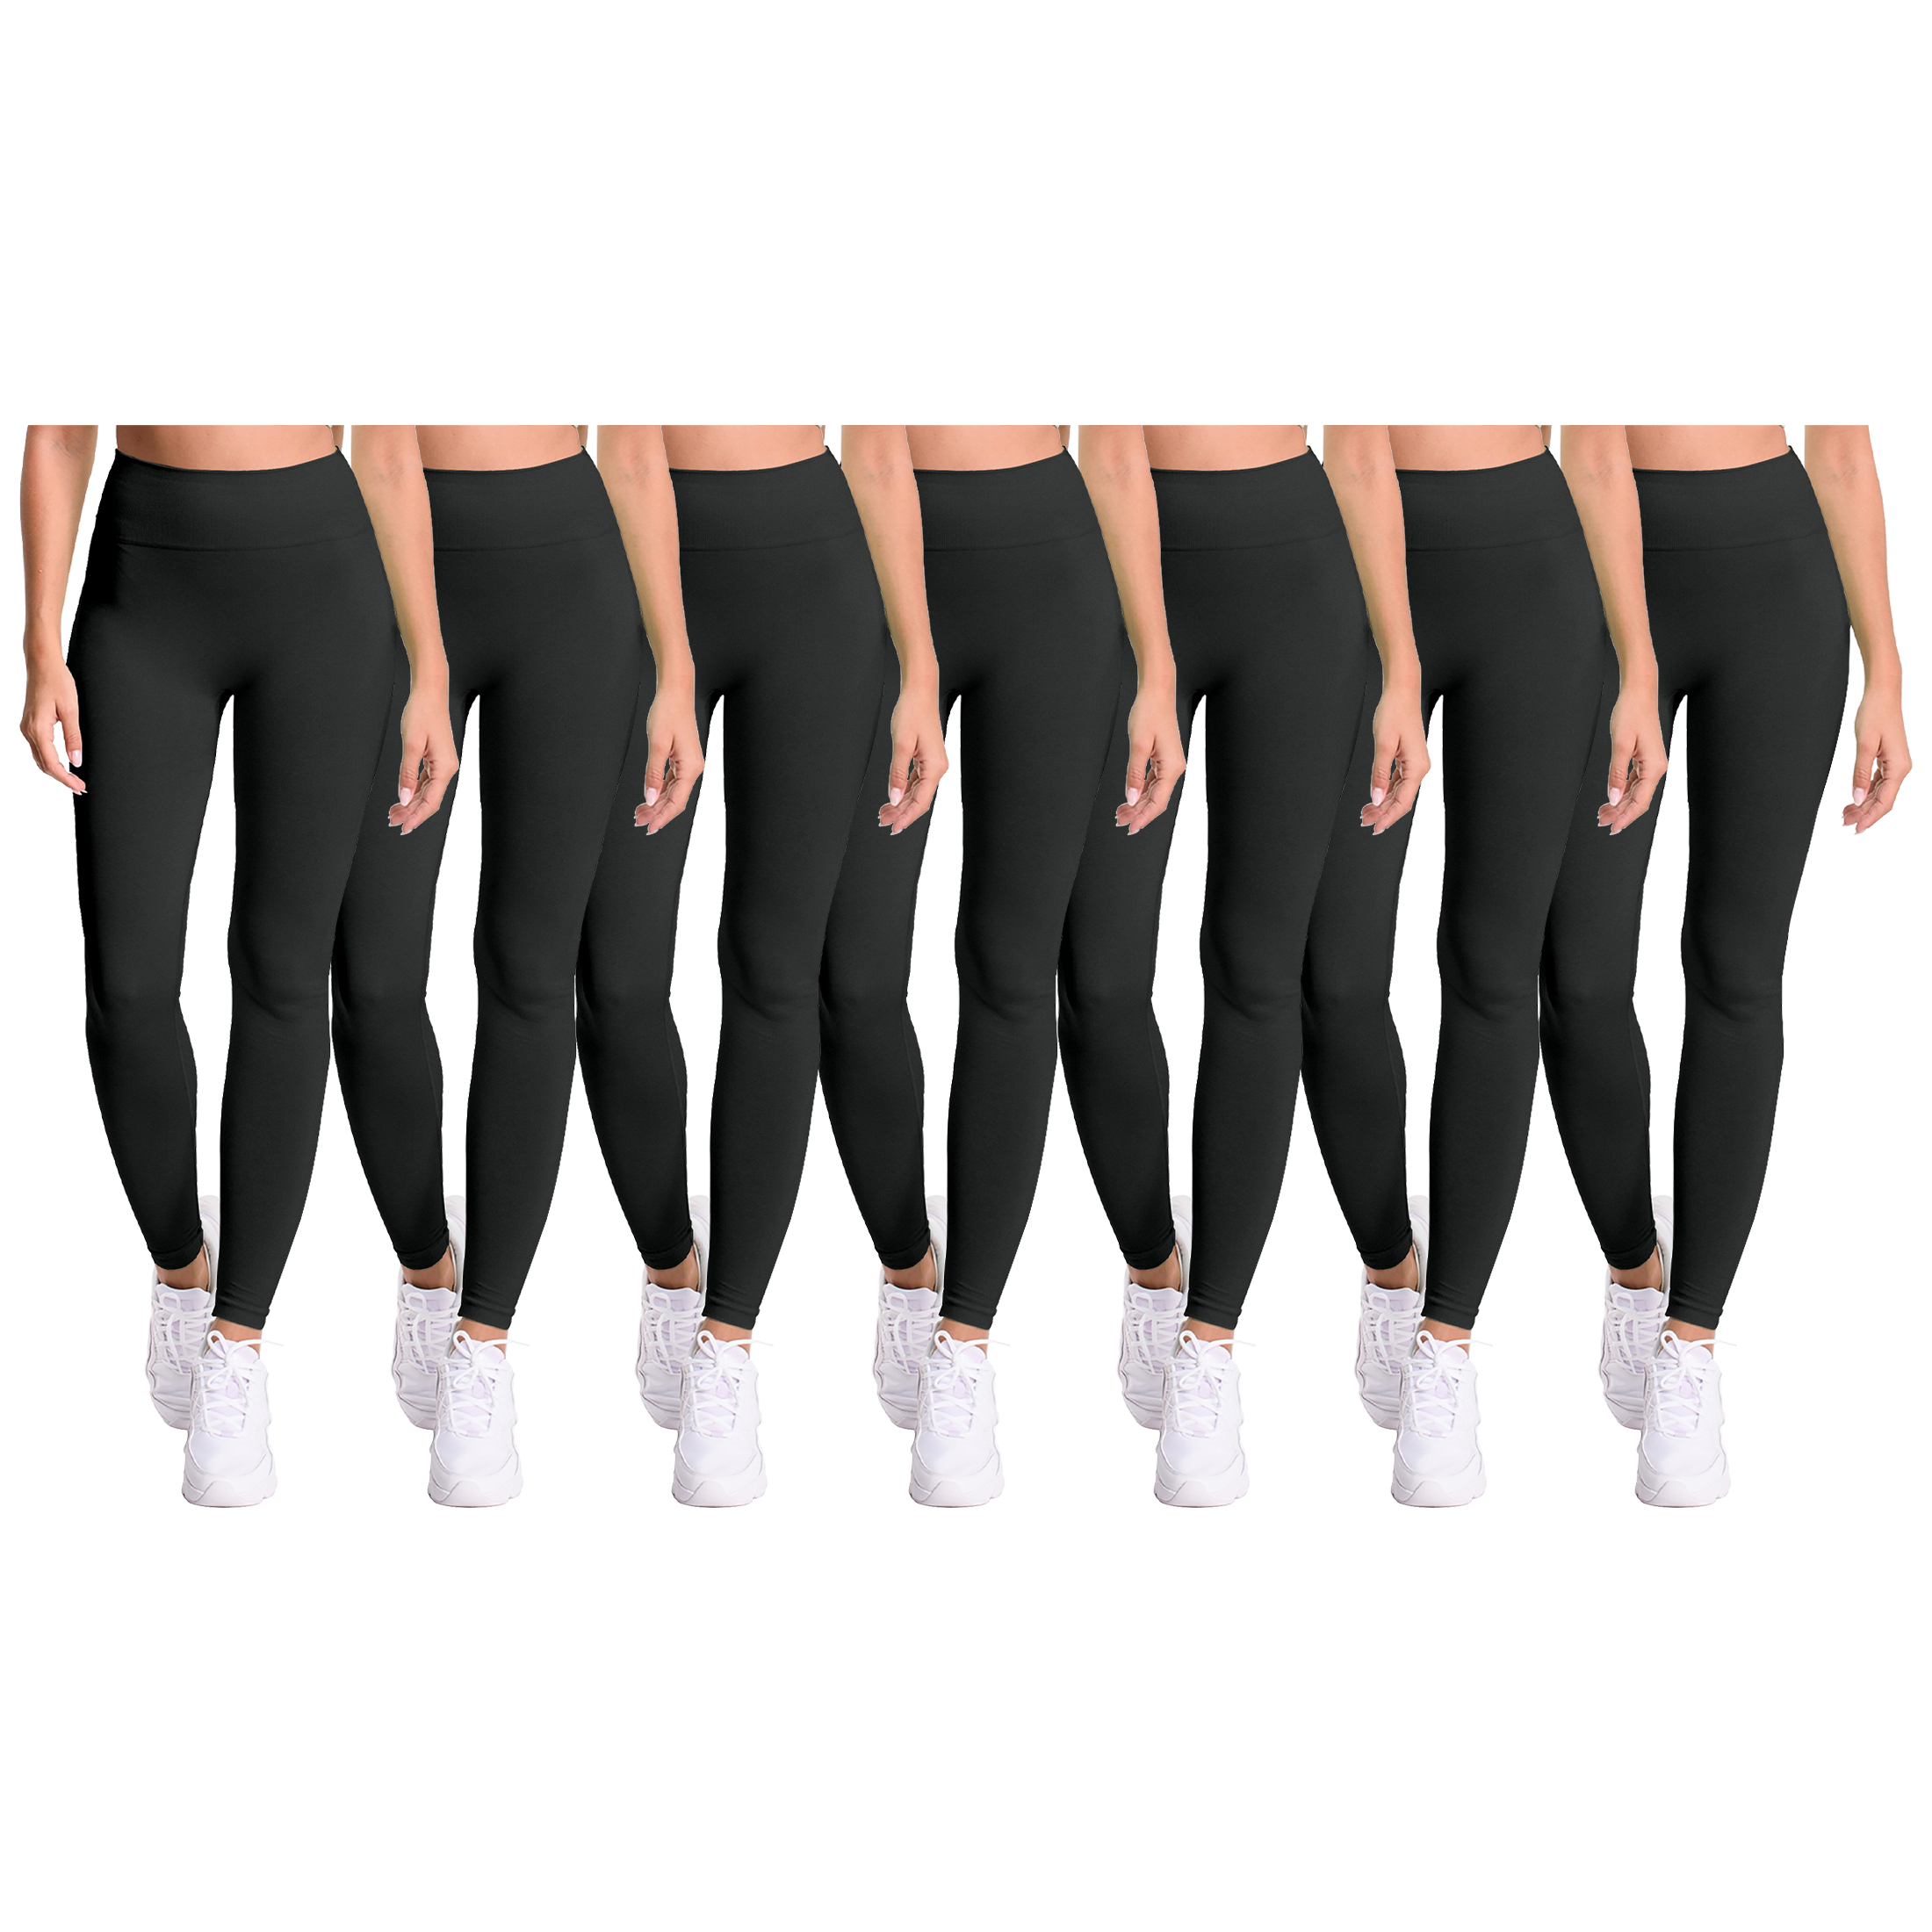 6-Pack: Women's Cozy Fleece-Lined Workout Yoga Pants Seamless Leggings - Black, Large